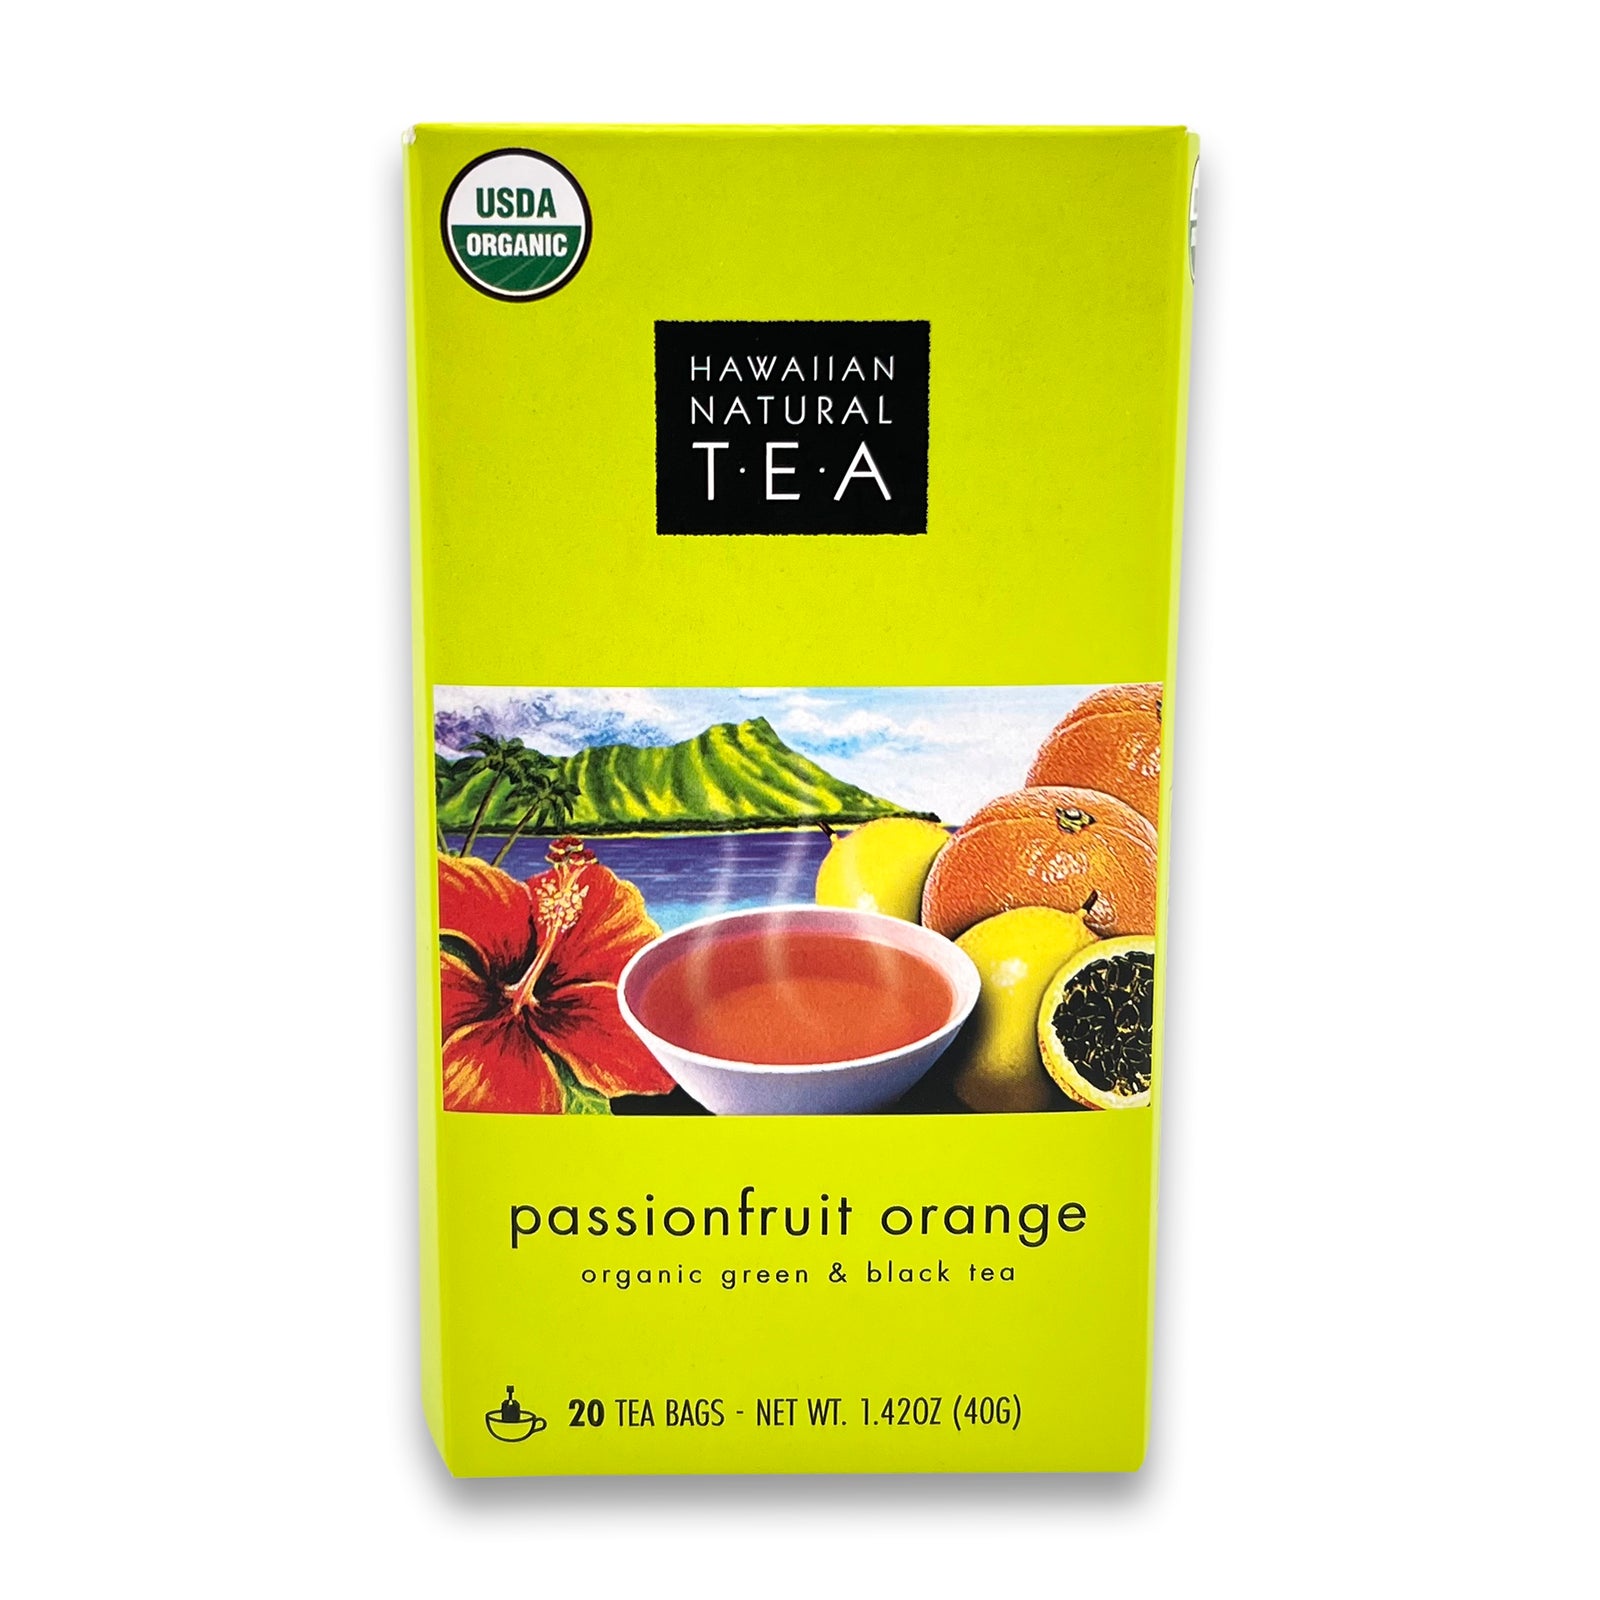 Pop-Up Mākeke - Tea Chest Hawaii - Organic Green & Black Tea - Passionfruit Orange - Front View